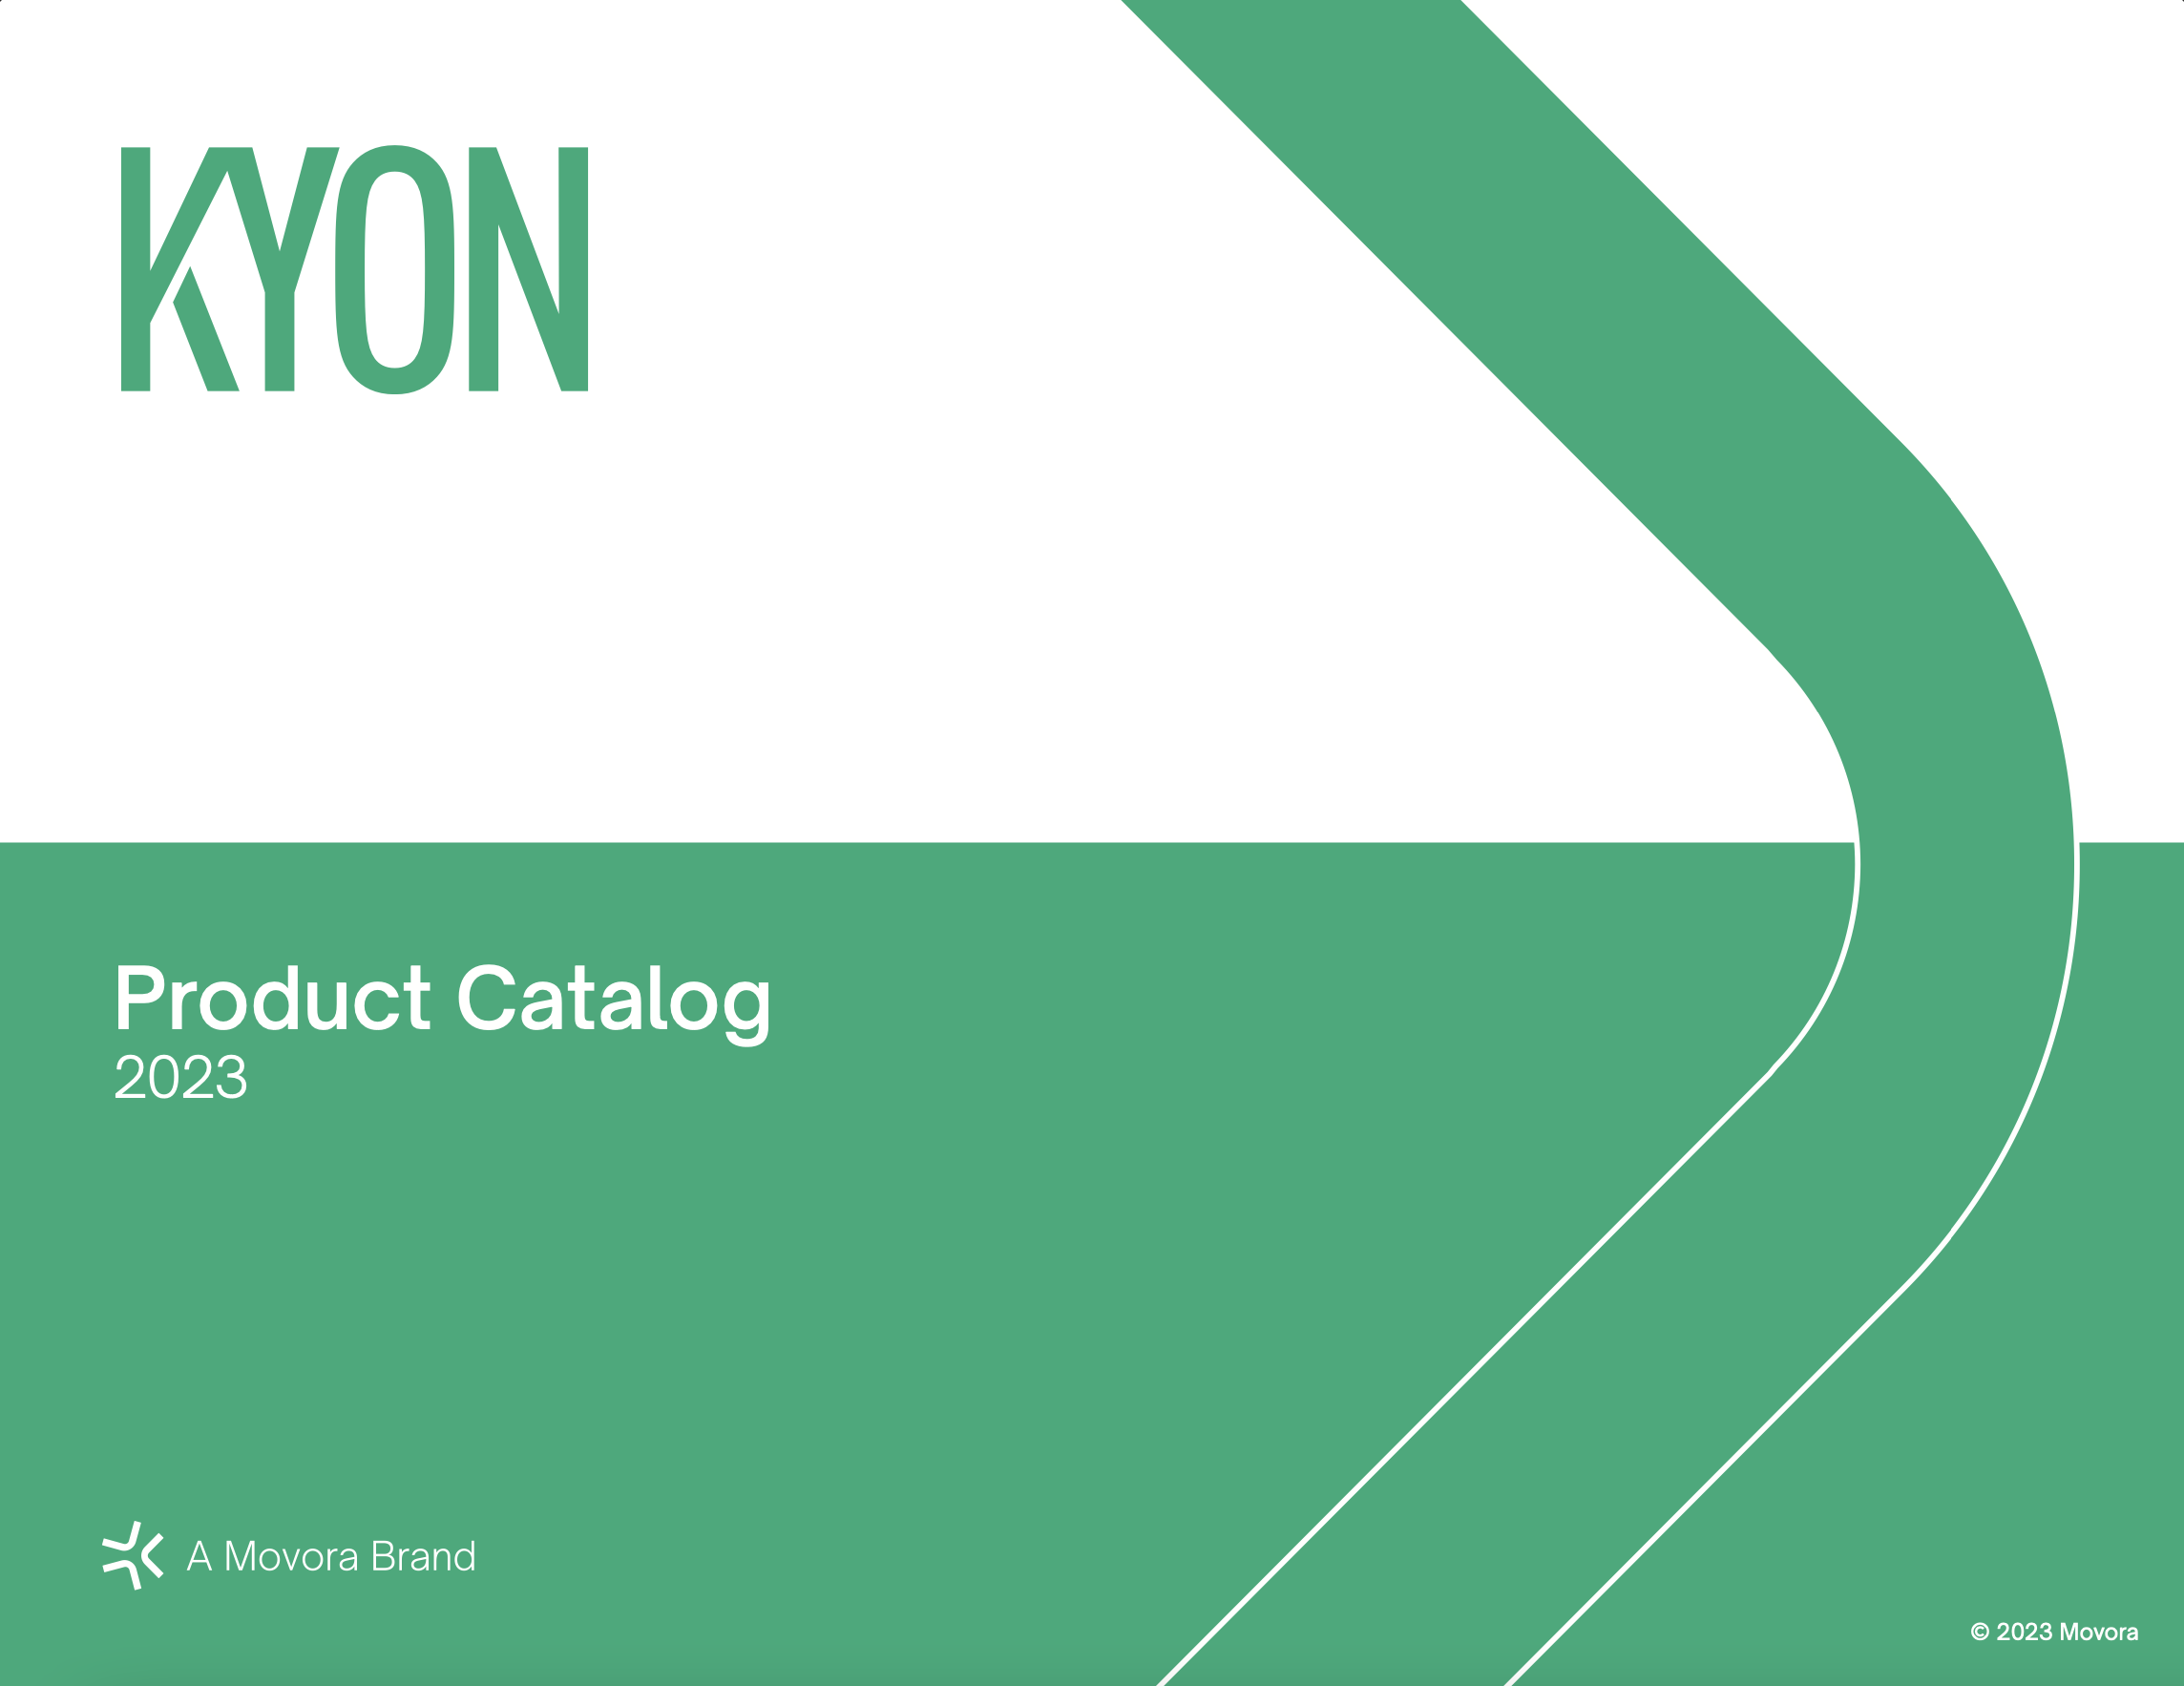 KYON Product Catalog